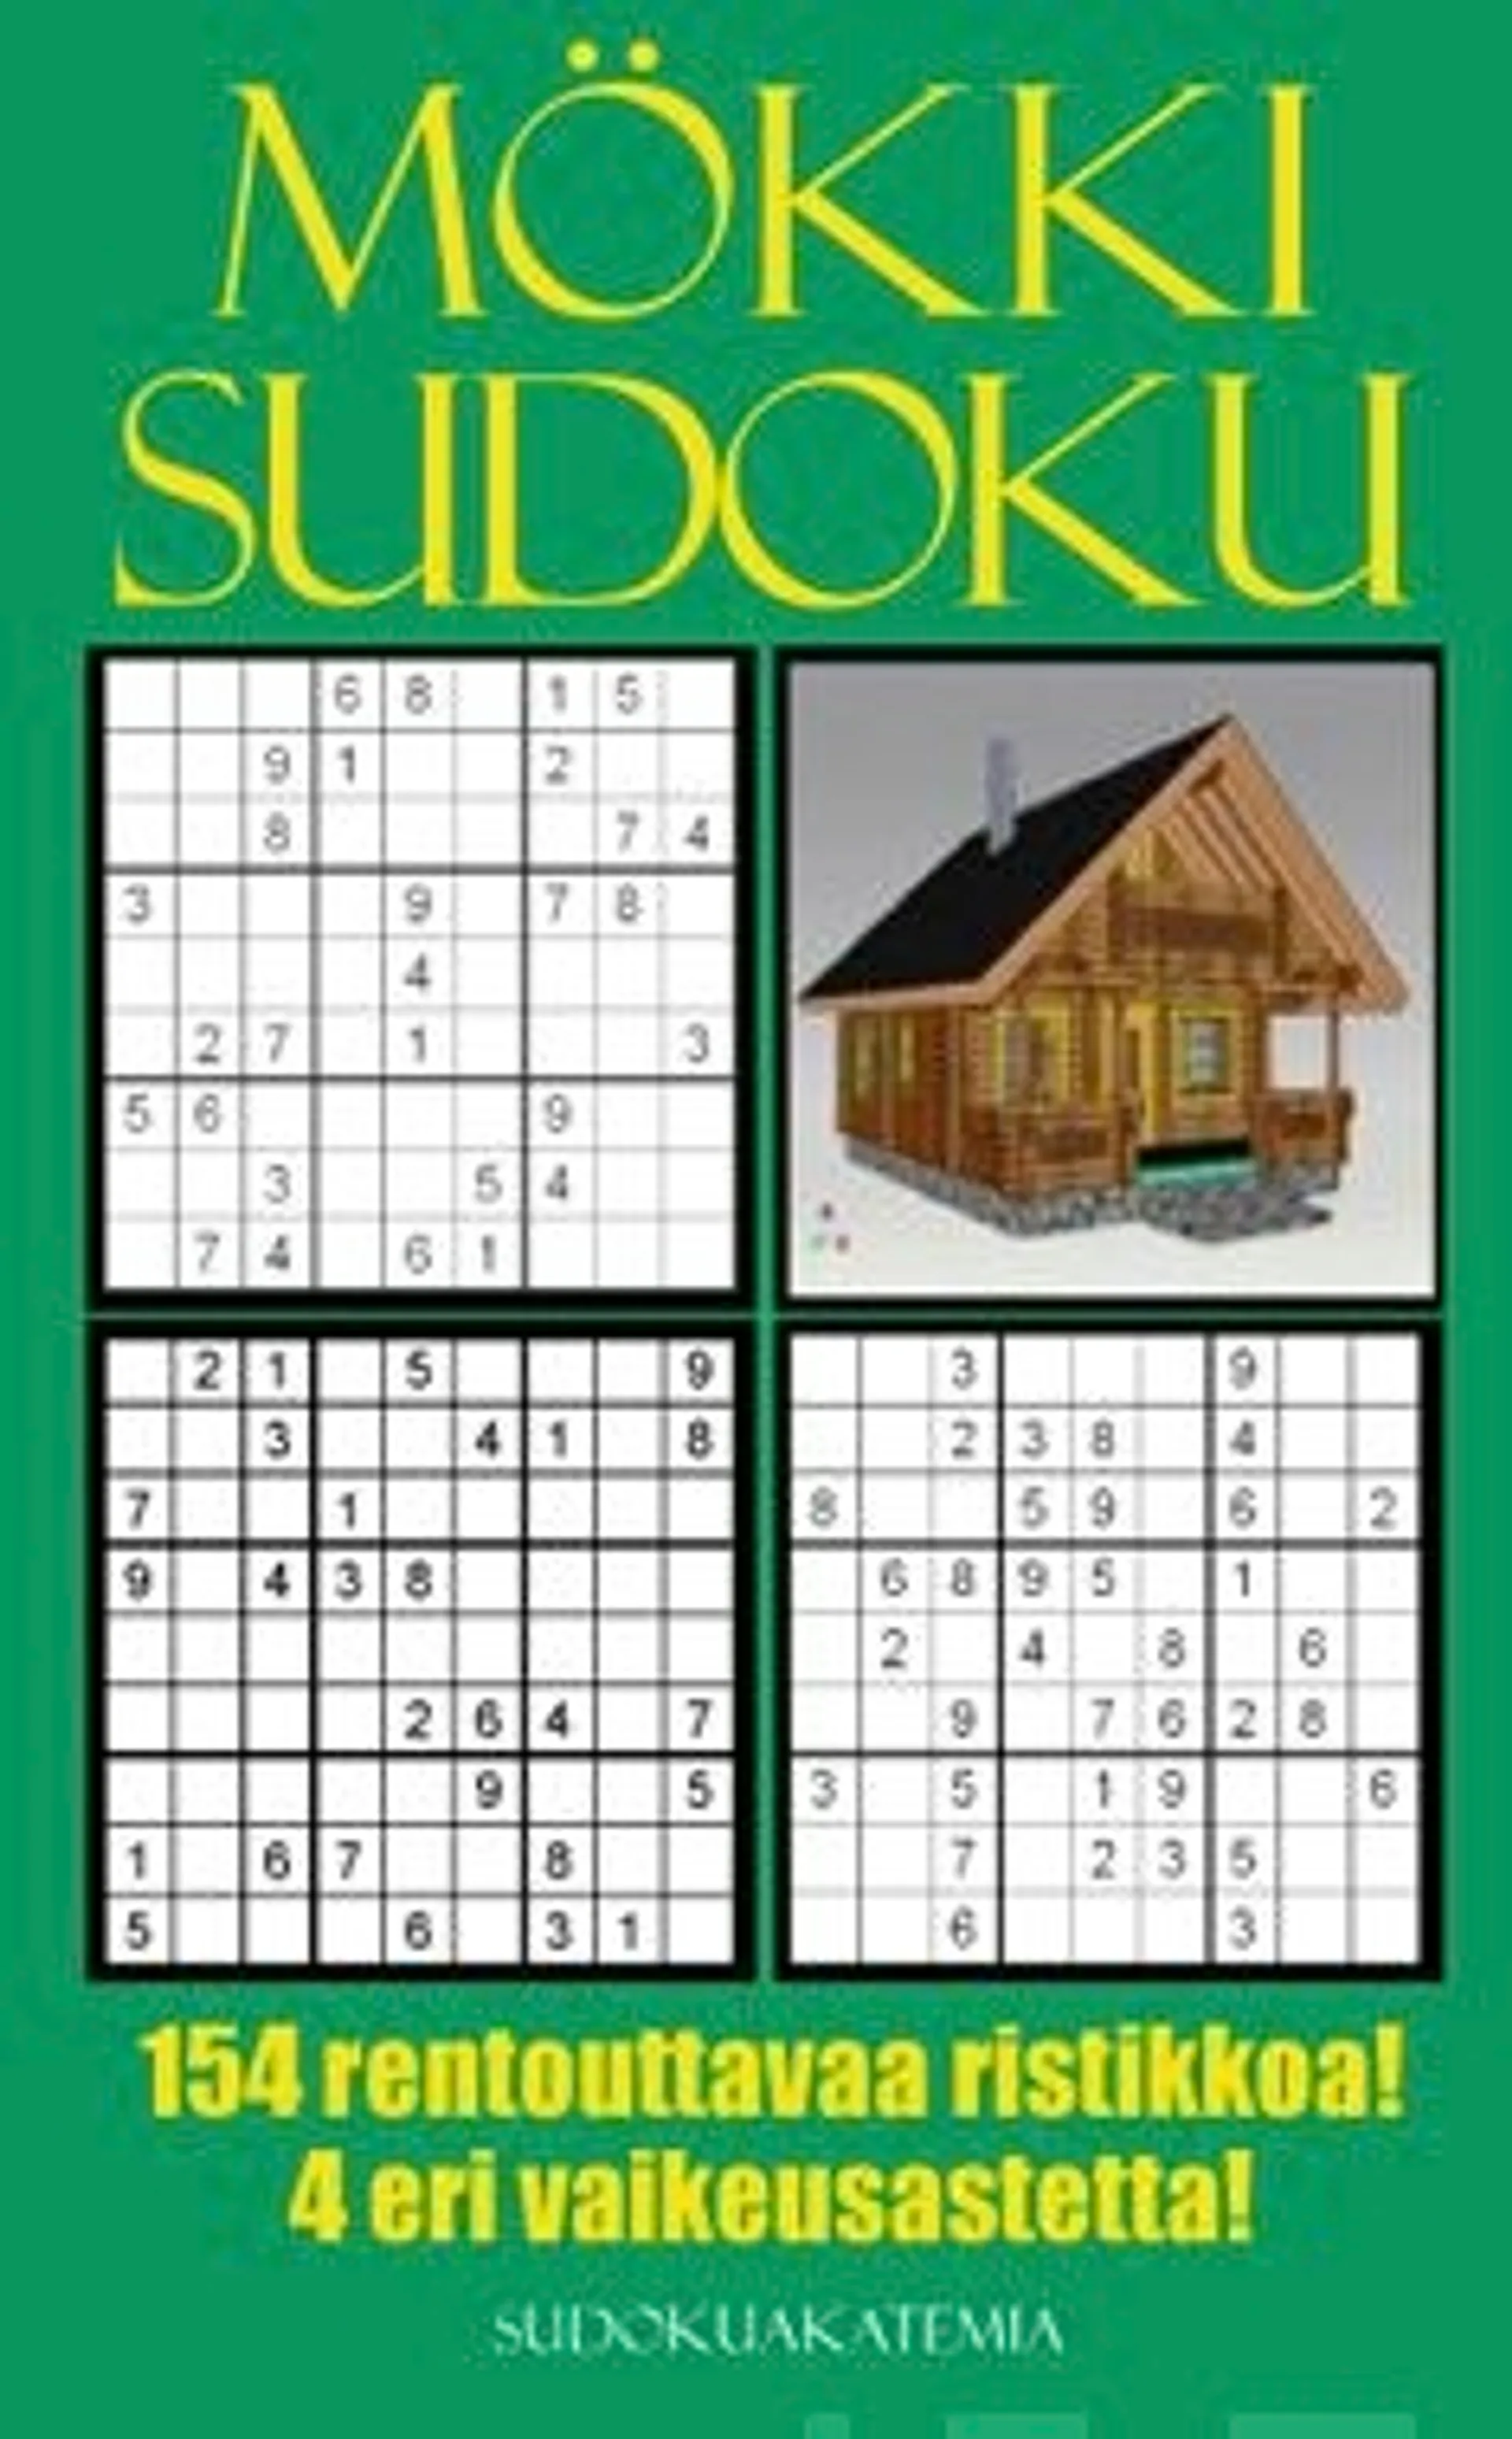 SudokuAkatemia, MökkiSudoku